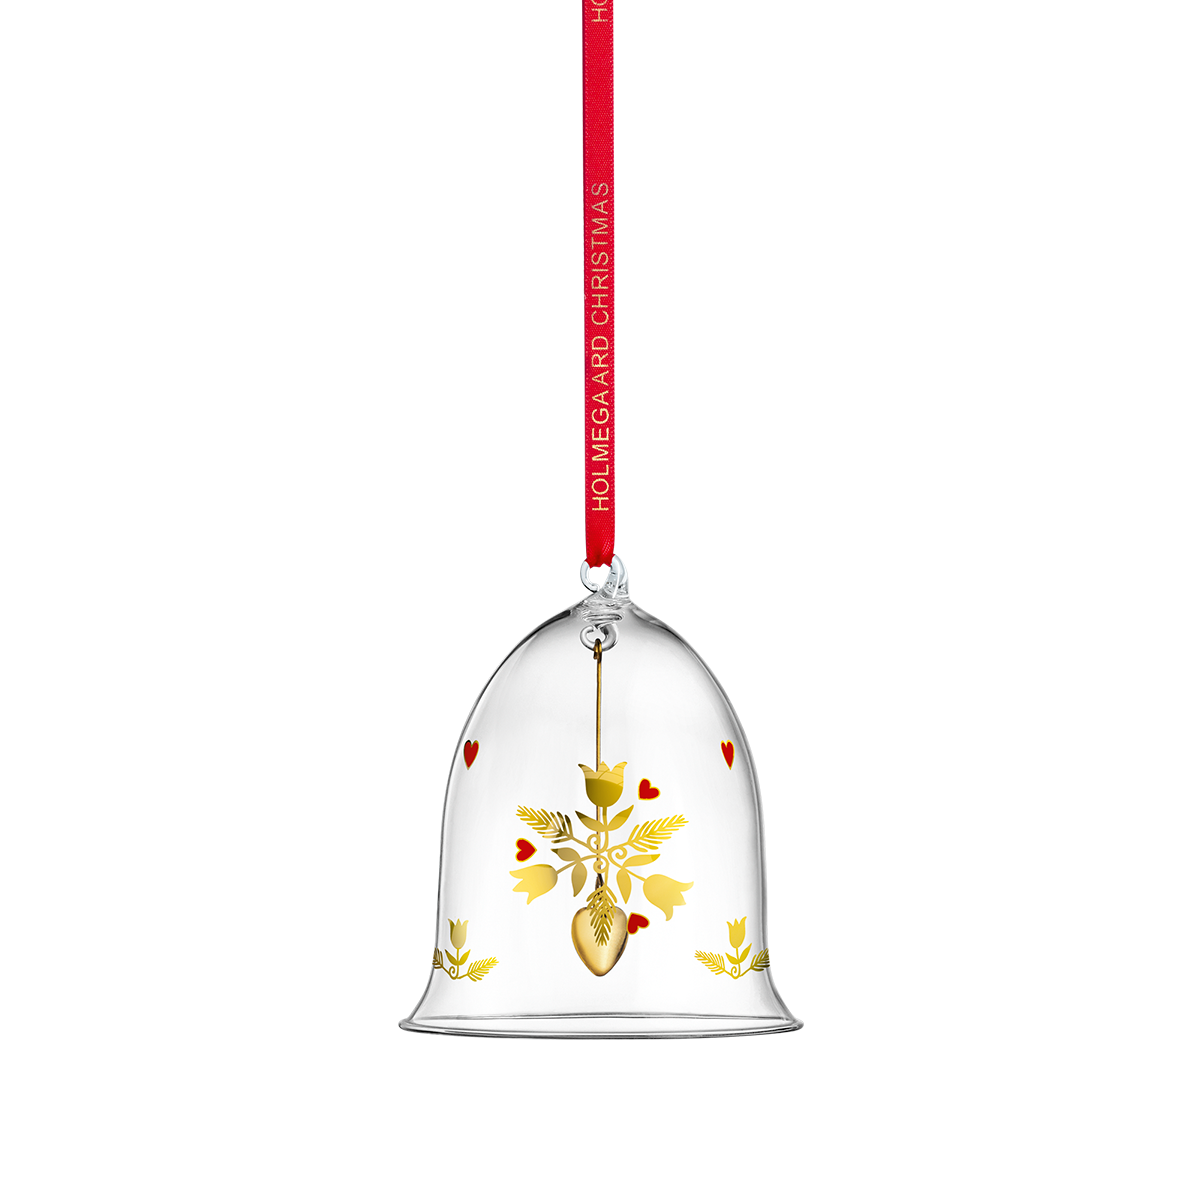 Ann-Sofi Romme Annual Christmas Bell 2020 Clear Large